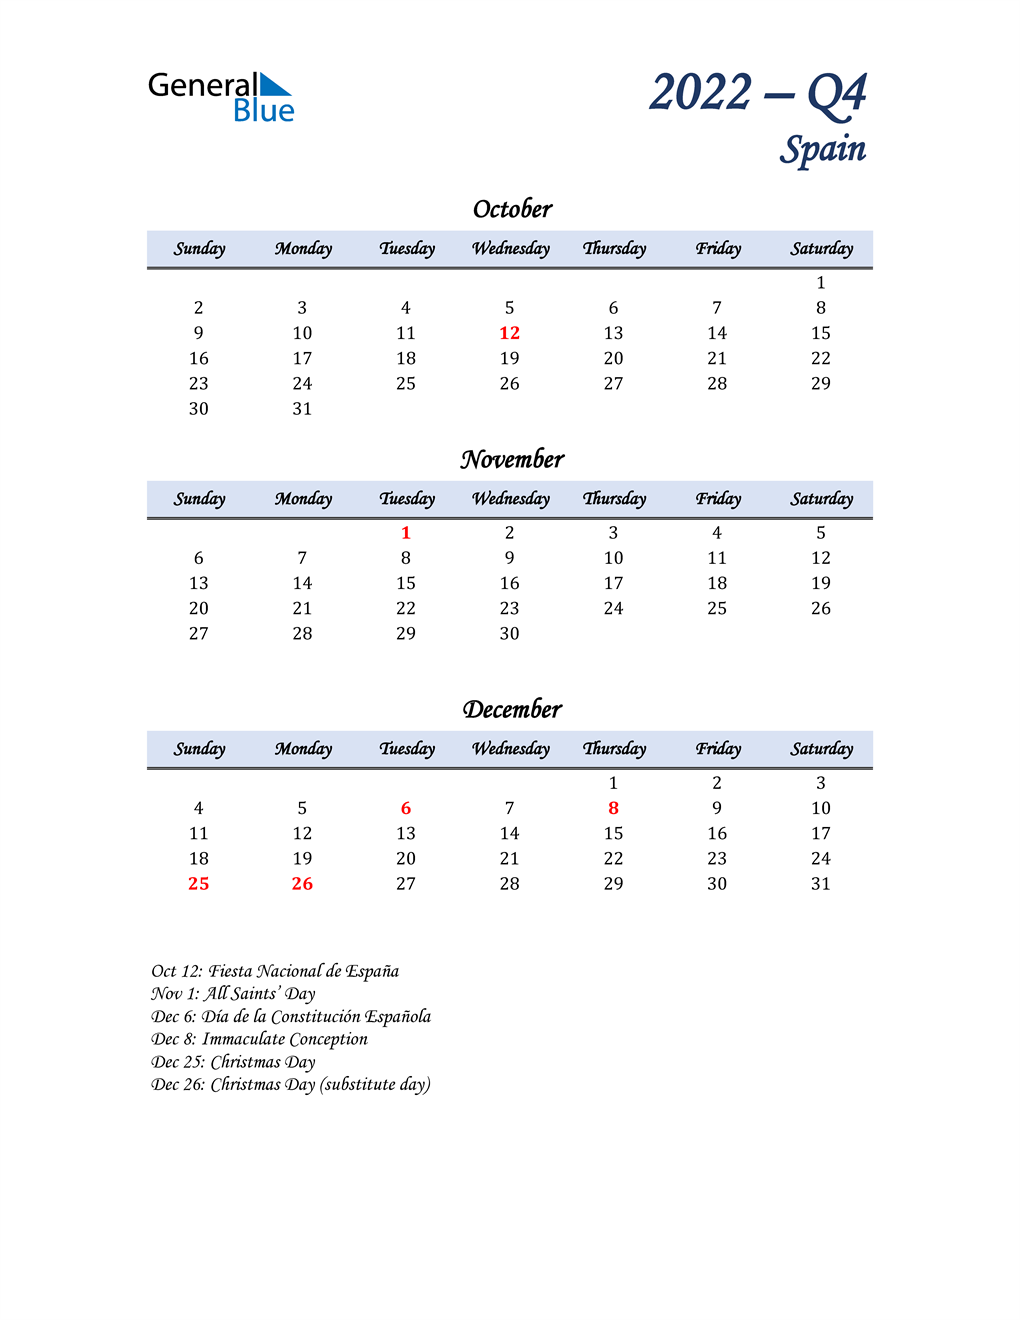  October, November, and December Calendar for Spain